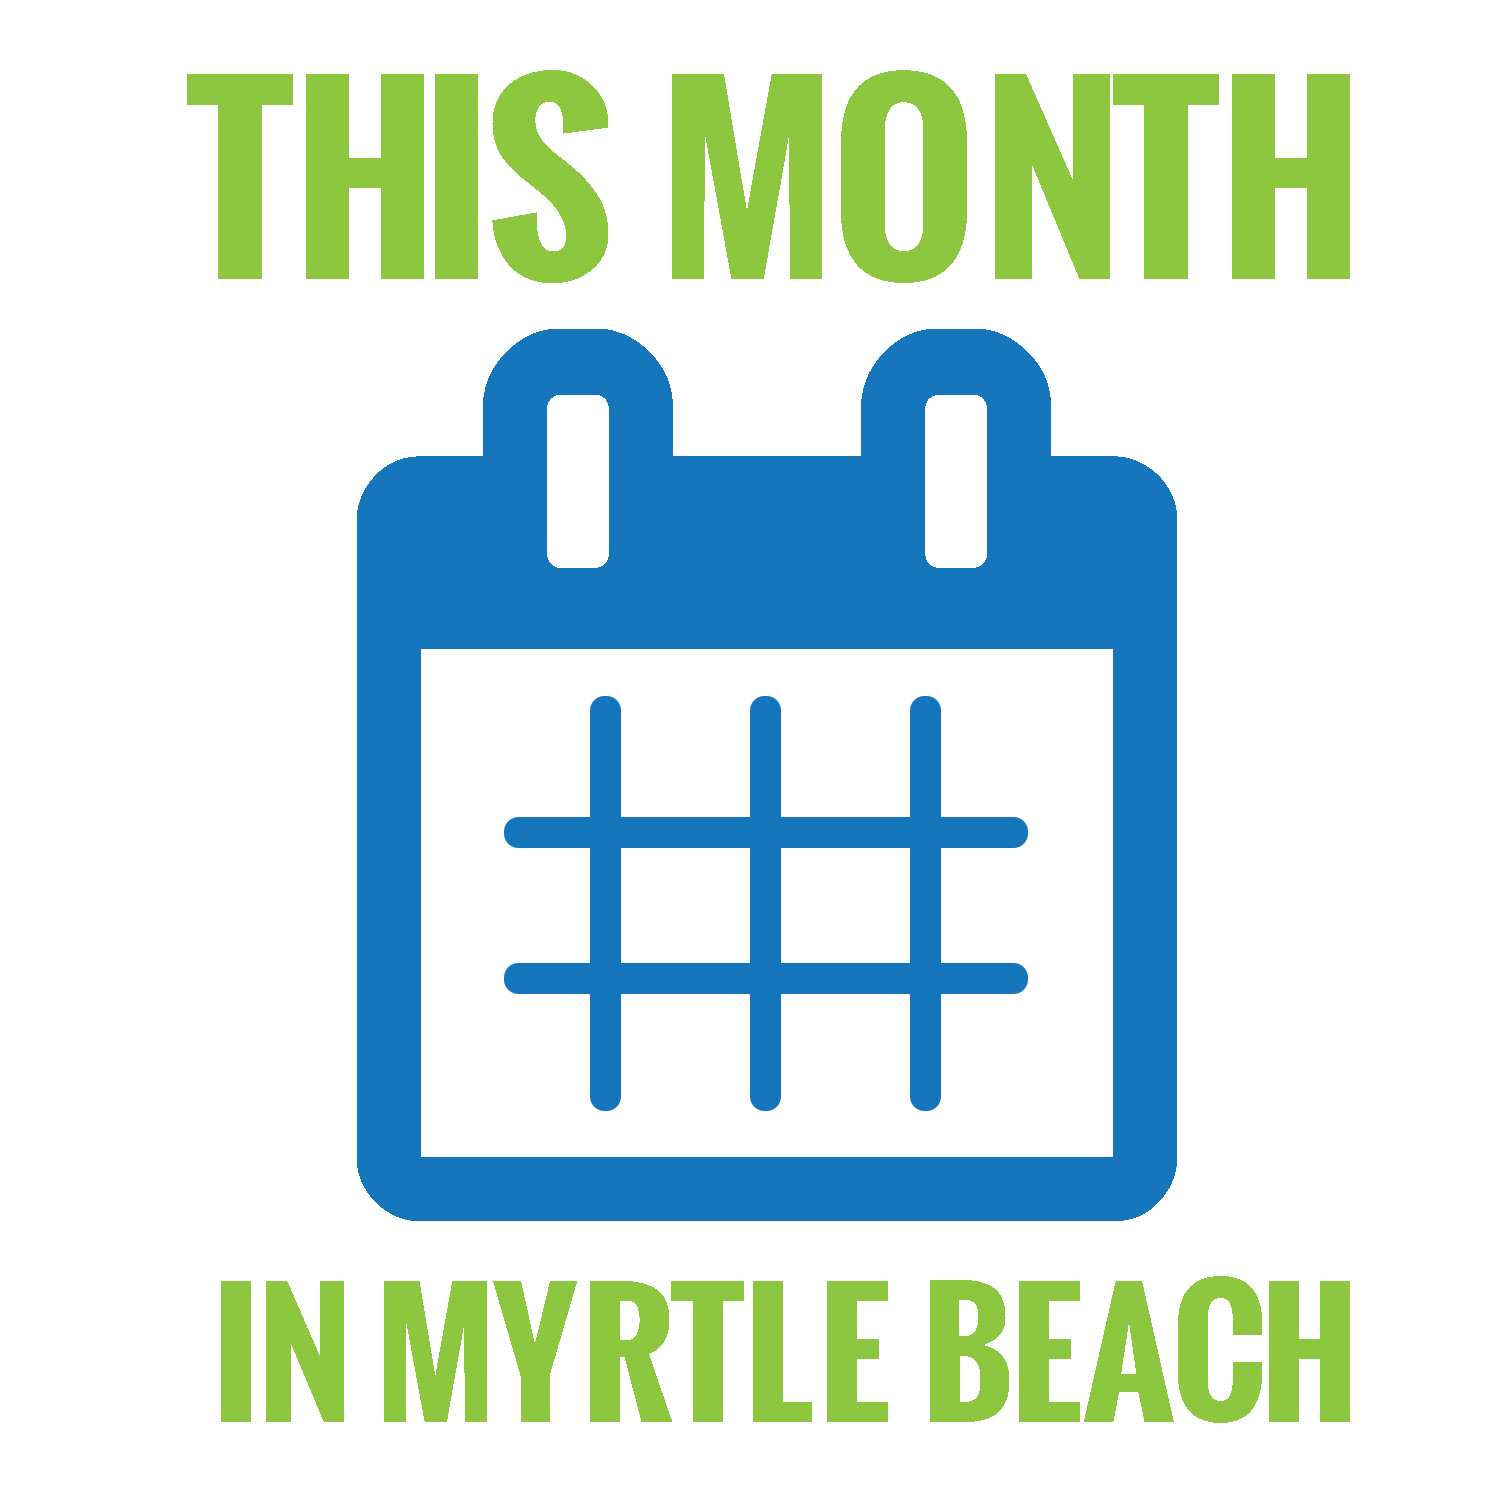 Myrtle Beach Events Calendar Myrtle Beach Real Estate For Sale Home